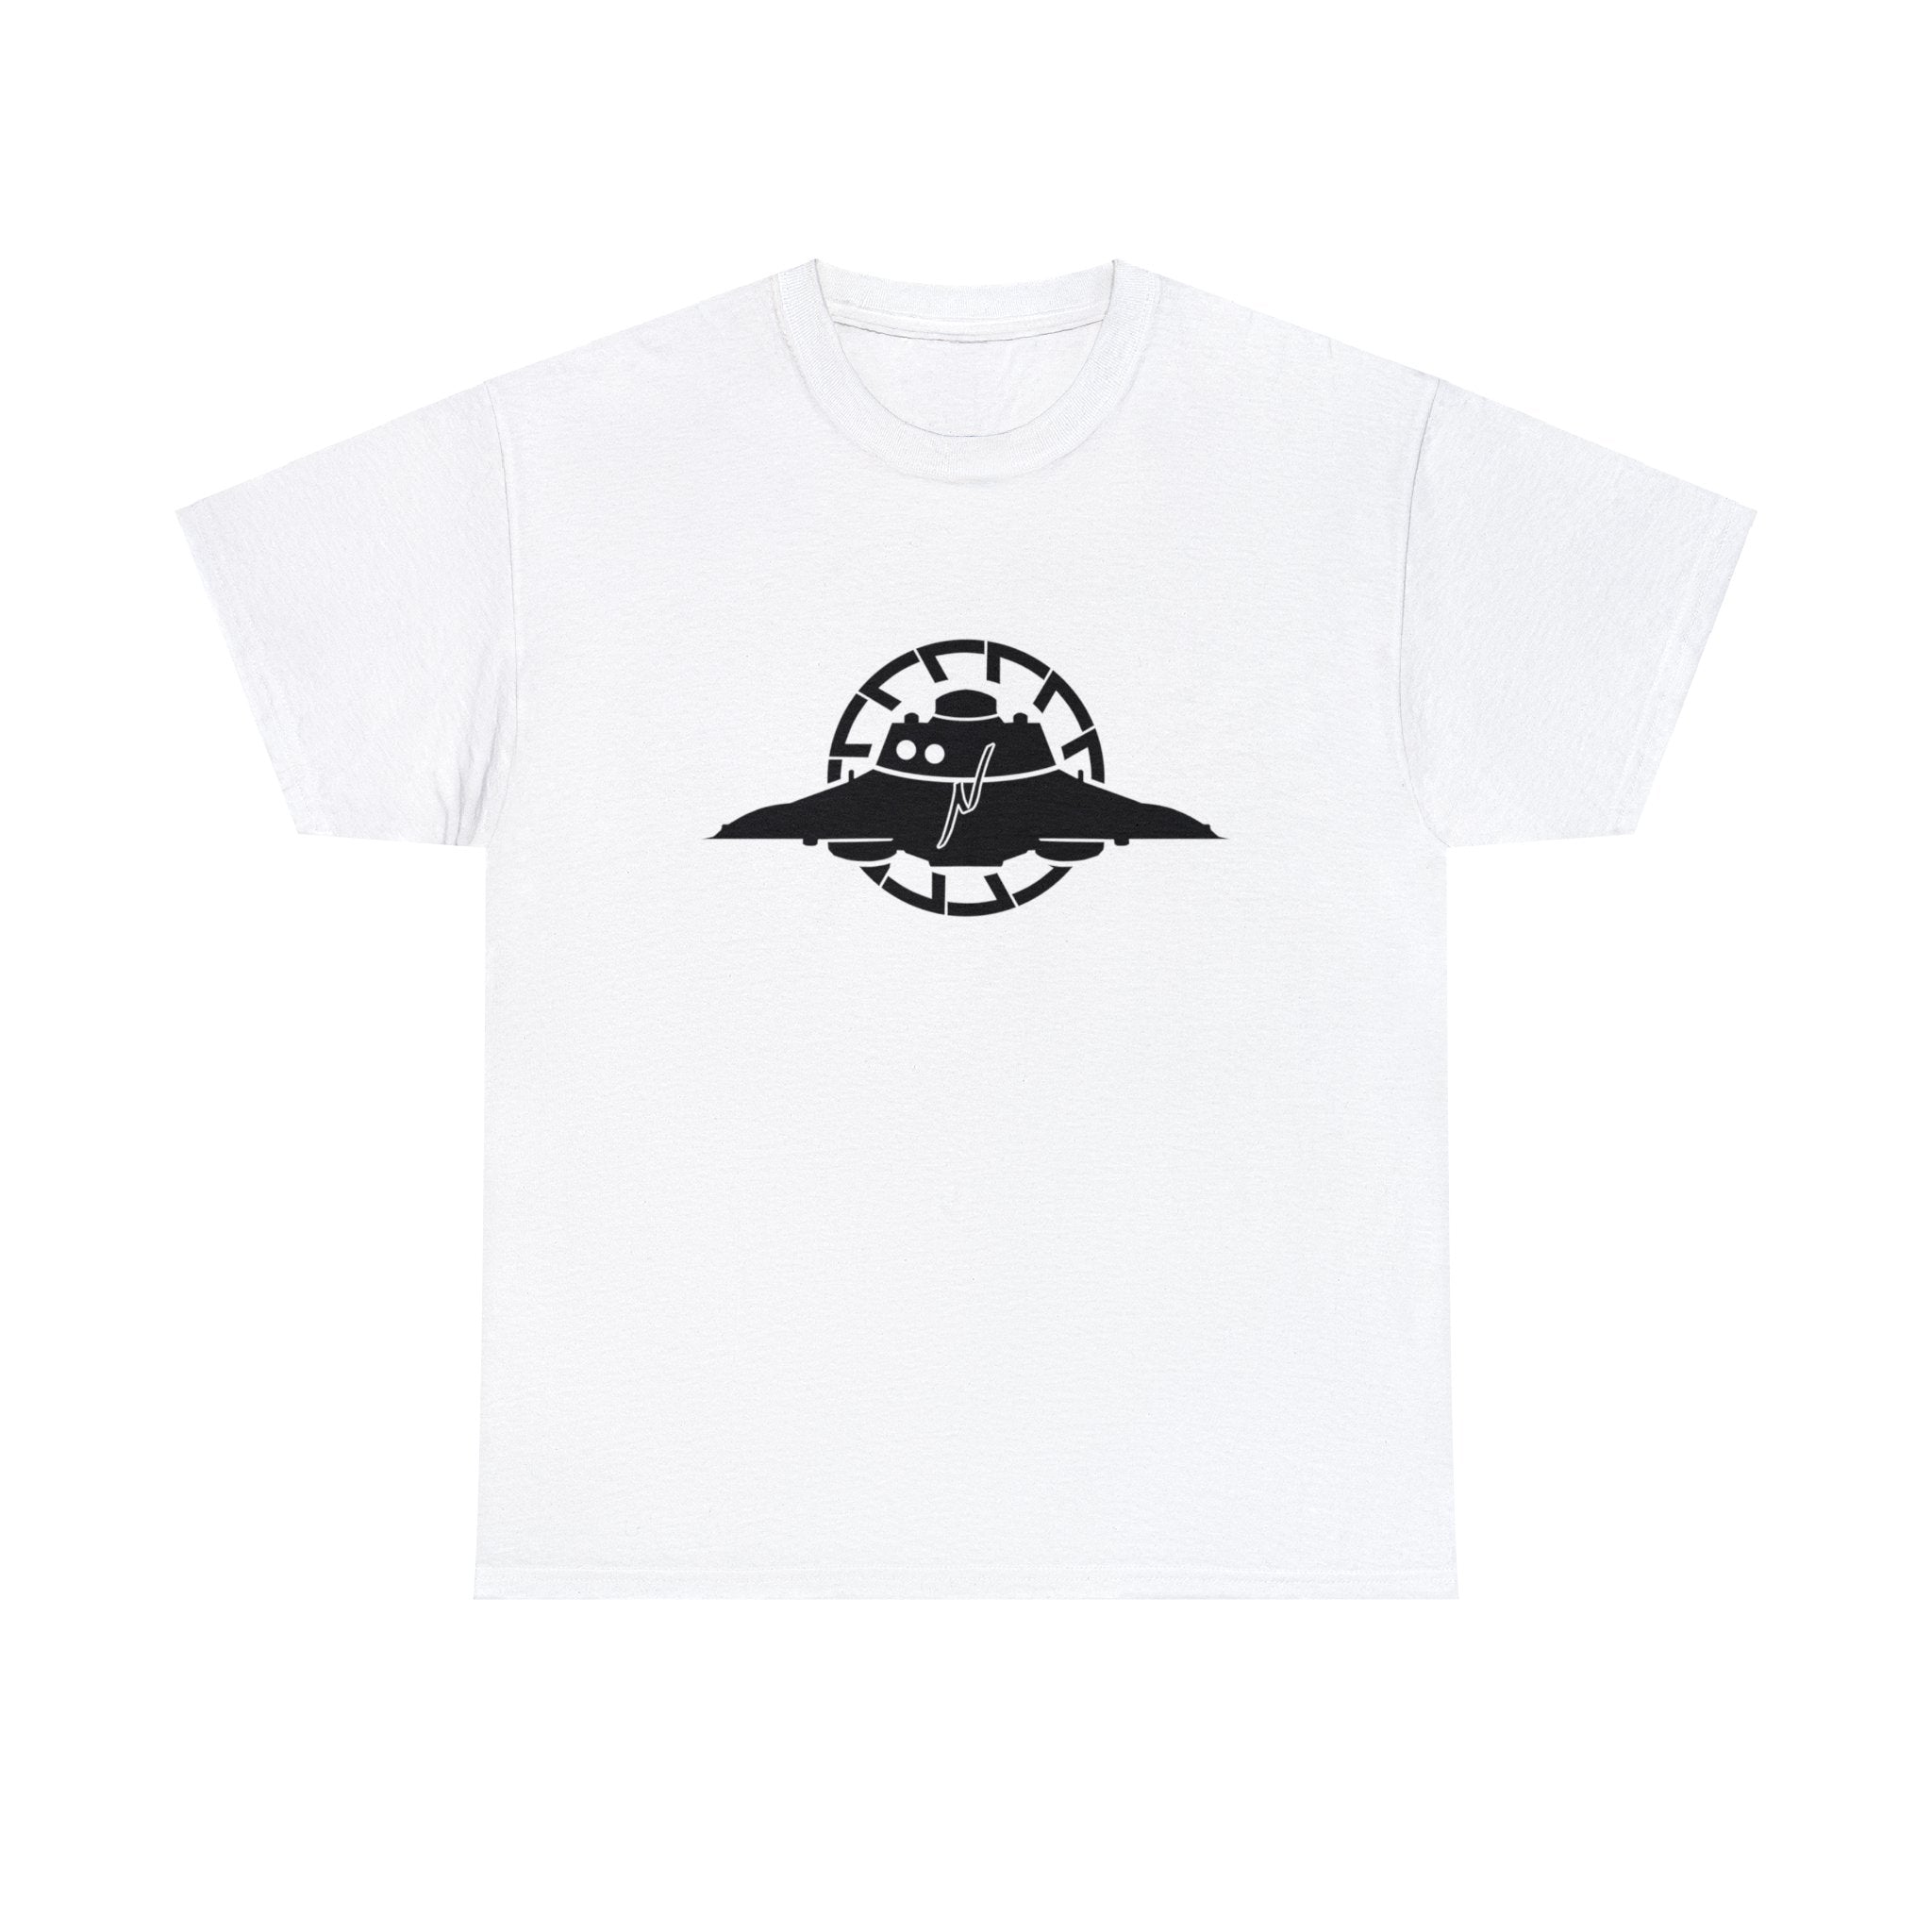 Haunebu N - Flugscheiben - T-Shirt